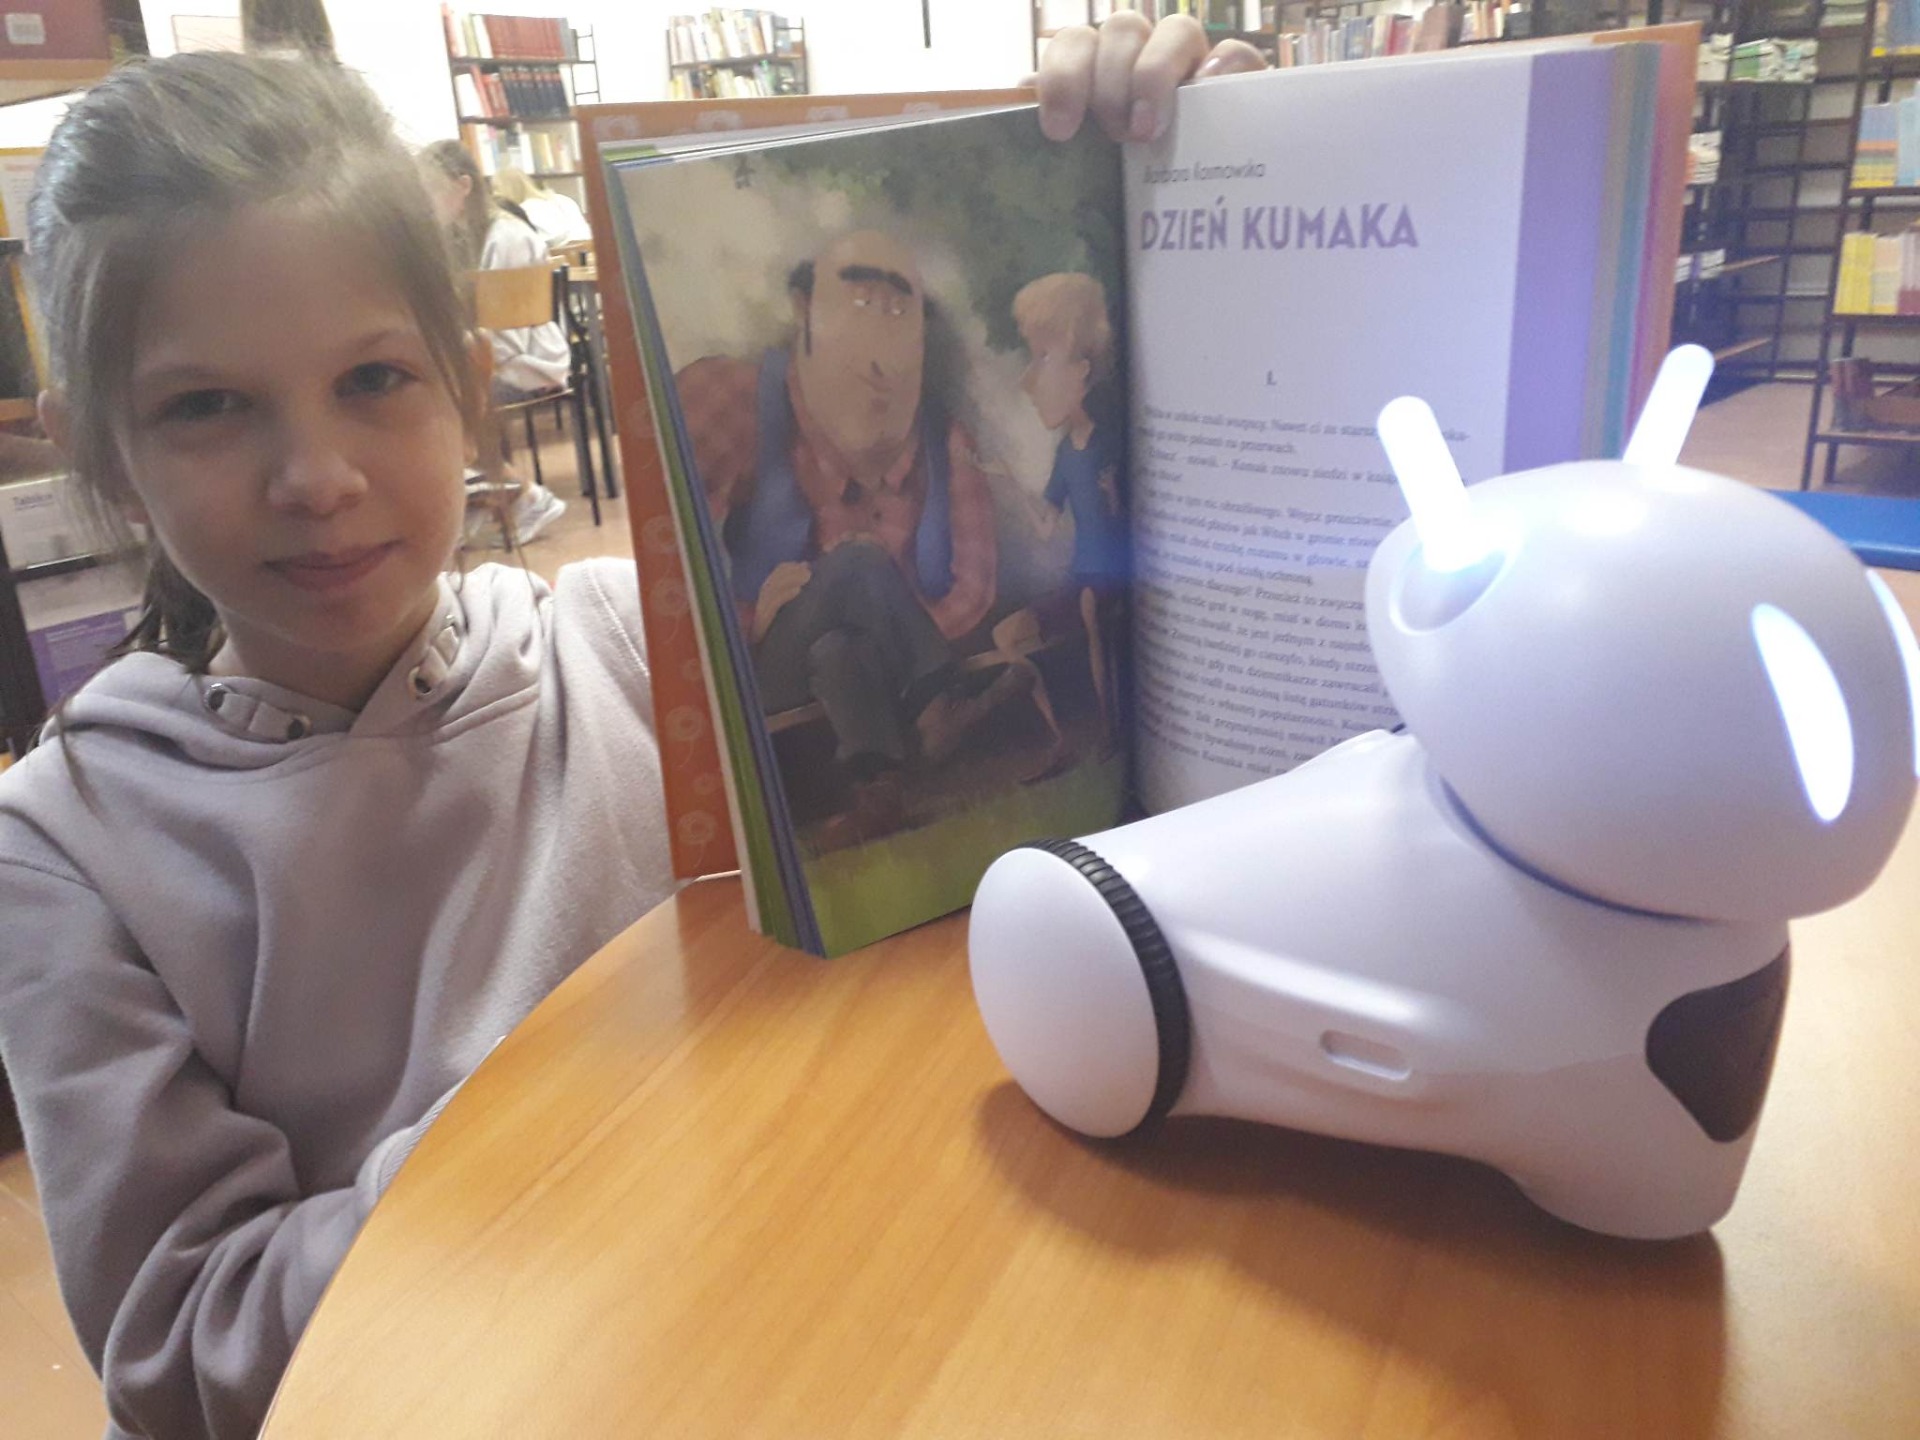 Ola Soska ucz. klasy IVa z książką oraz robotem Photon